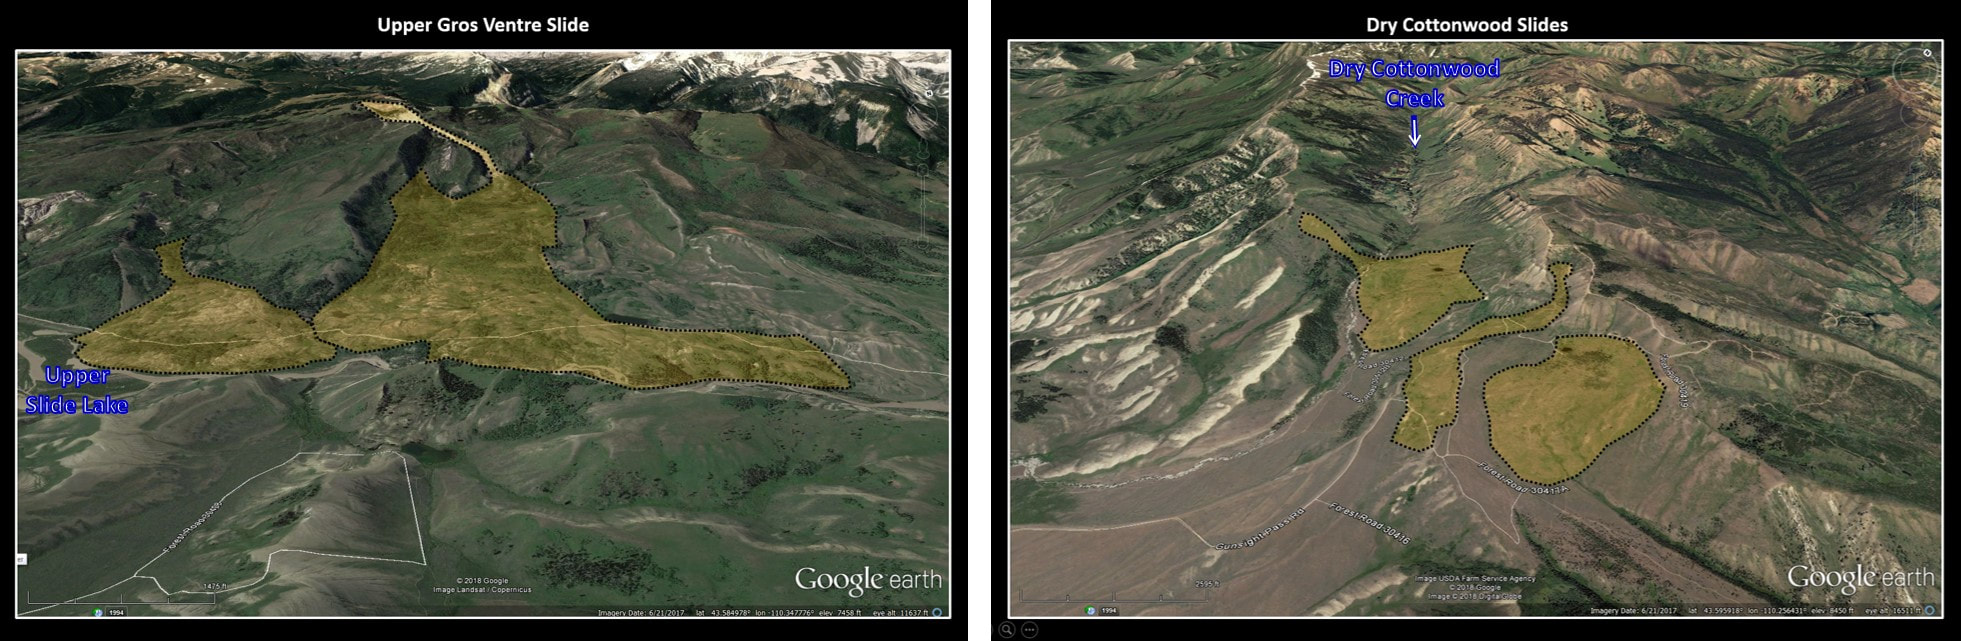 Aerial view of Upper Gros Ventre landslide and Dry Cottonwood Creek landslides, Wyoming